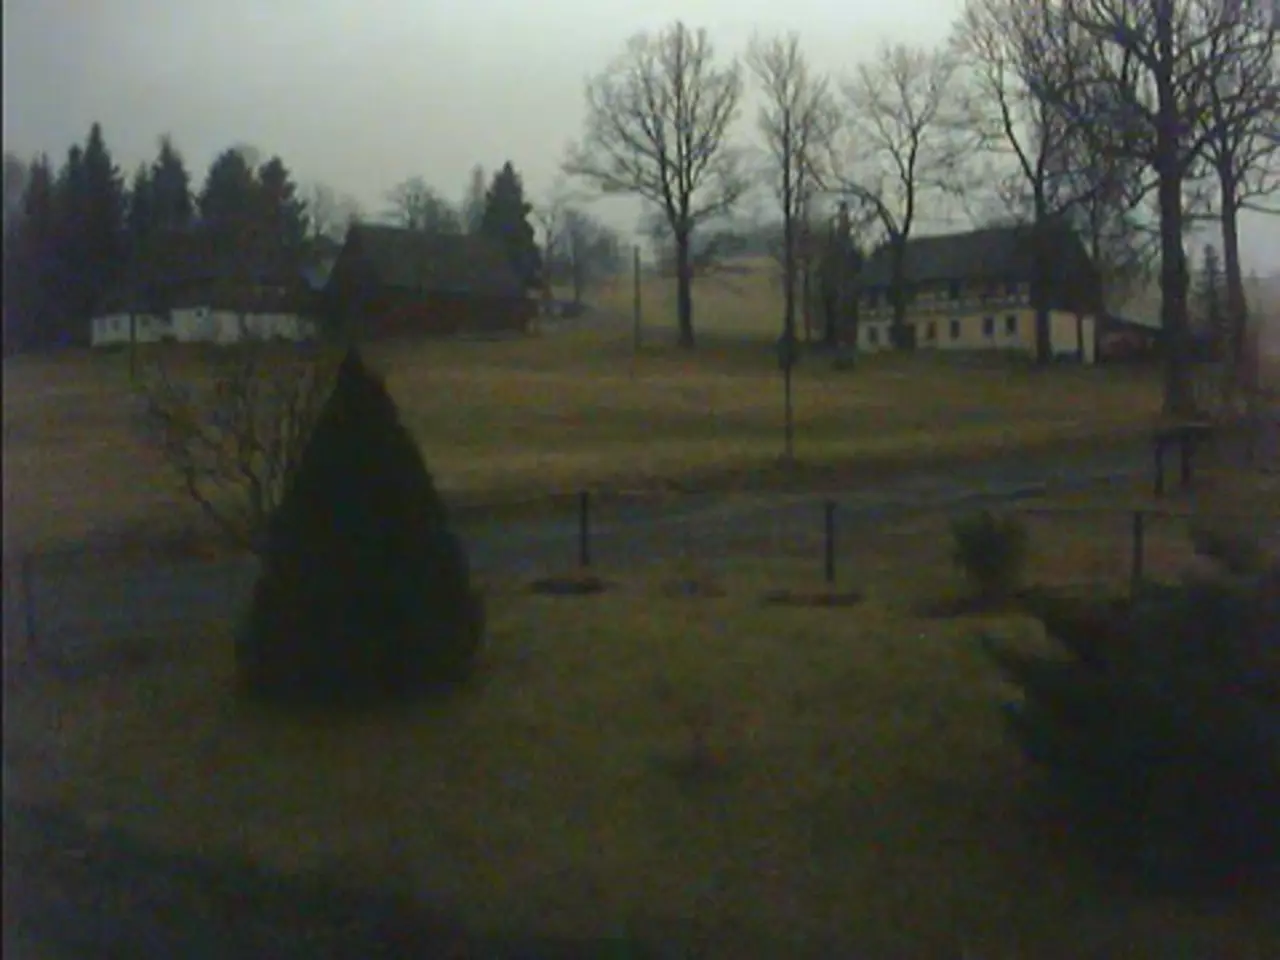 Foto: Webcam - Wetterfilm aus Holzhau, 7.4.2012